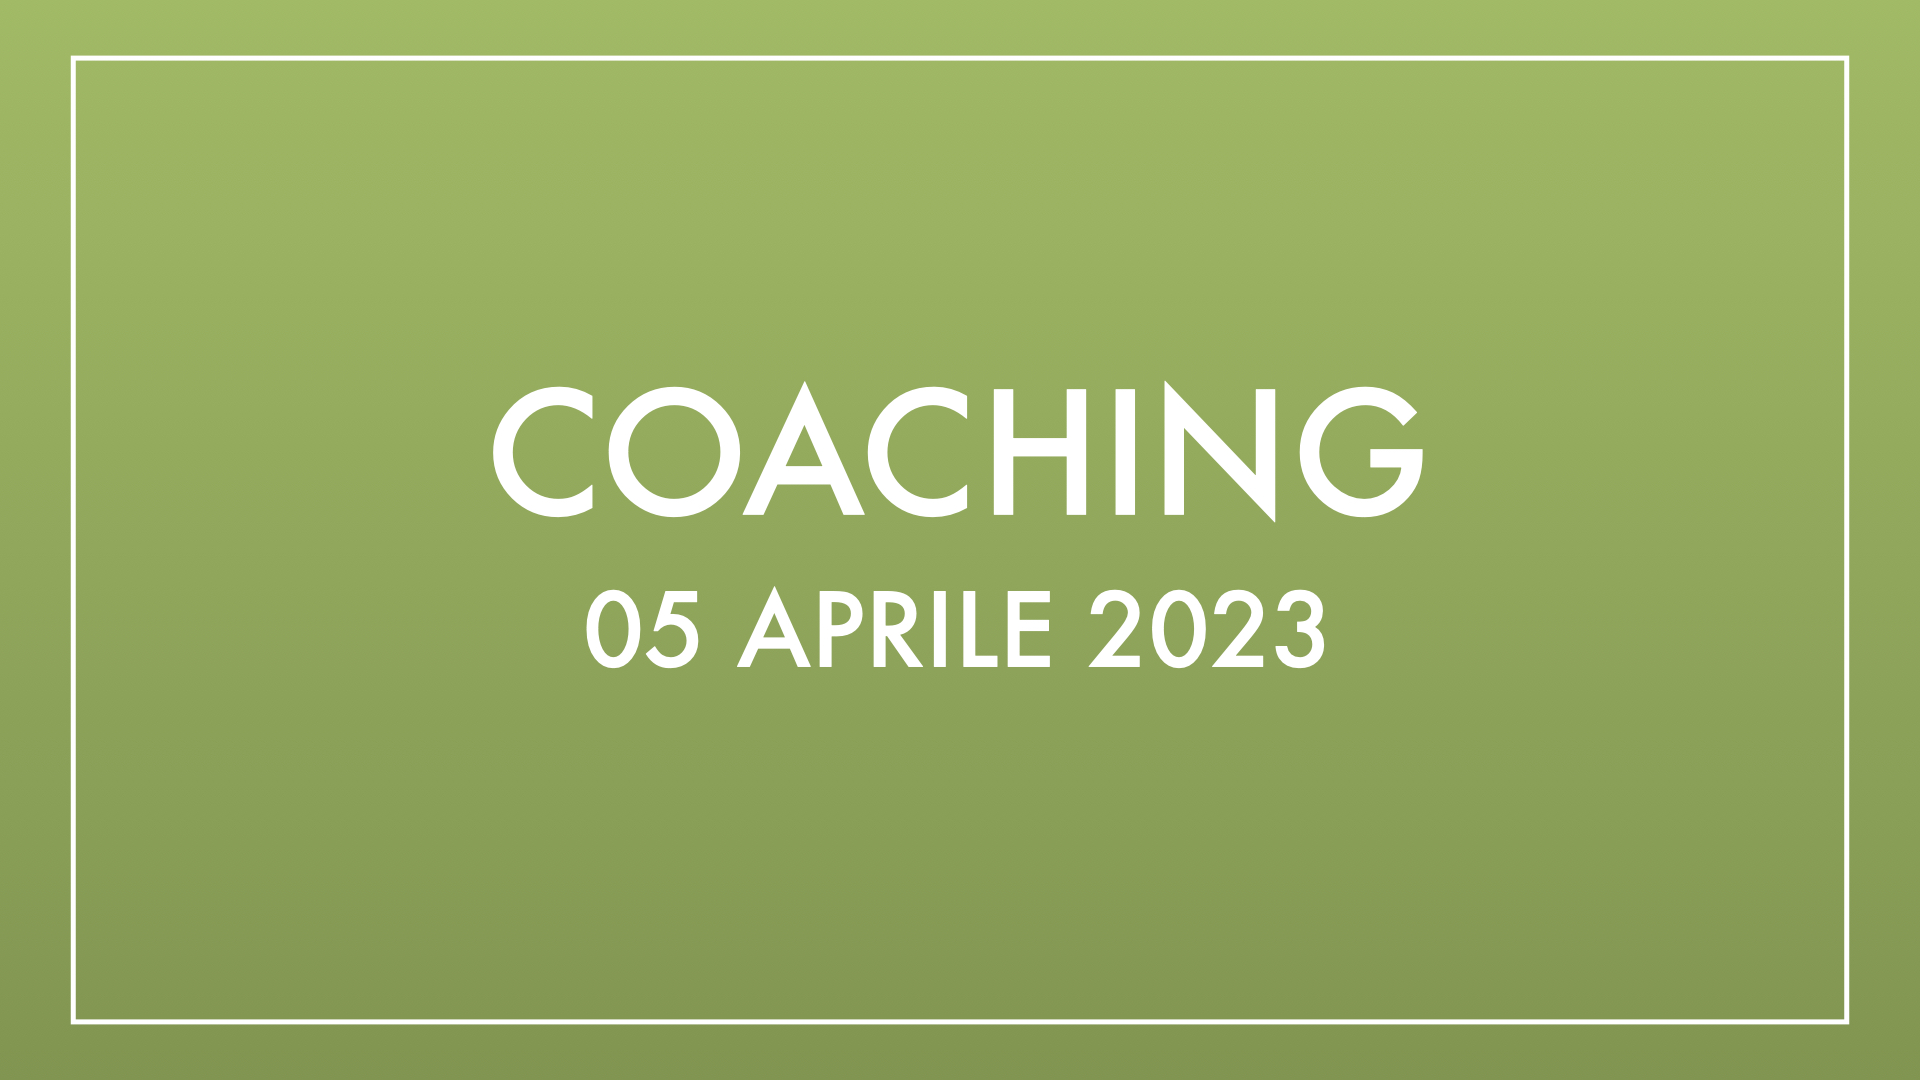 Coaching 05 aprile 2023